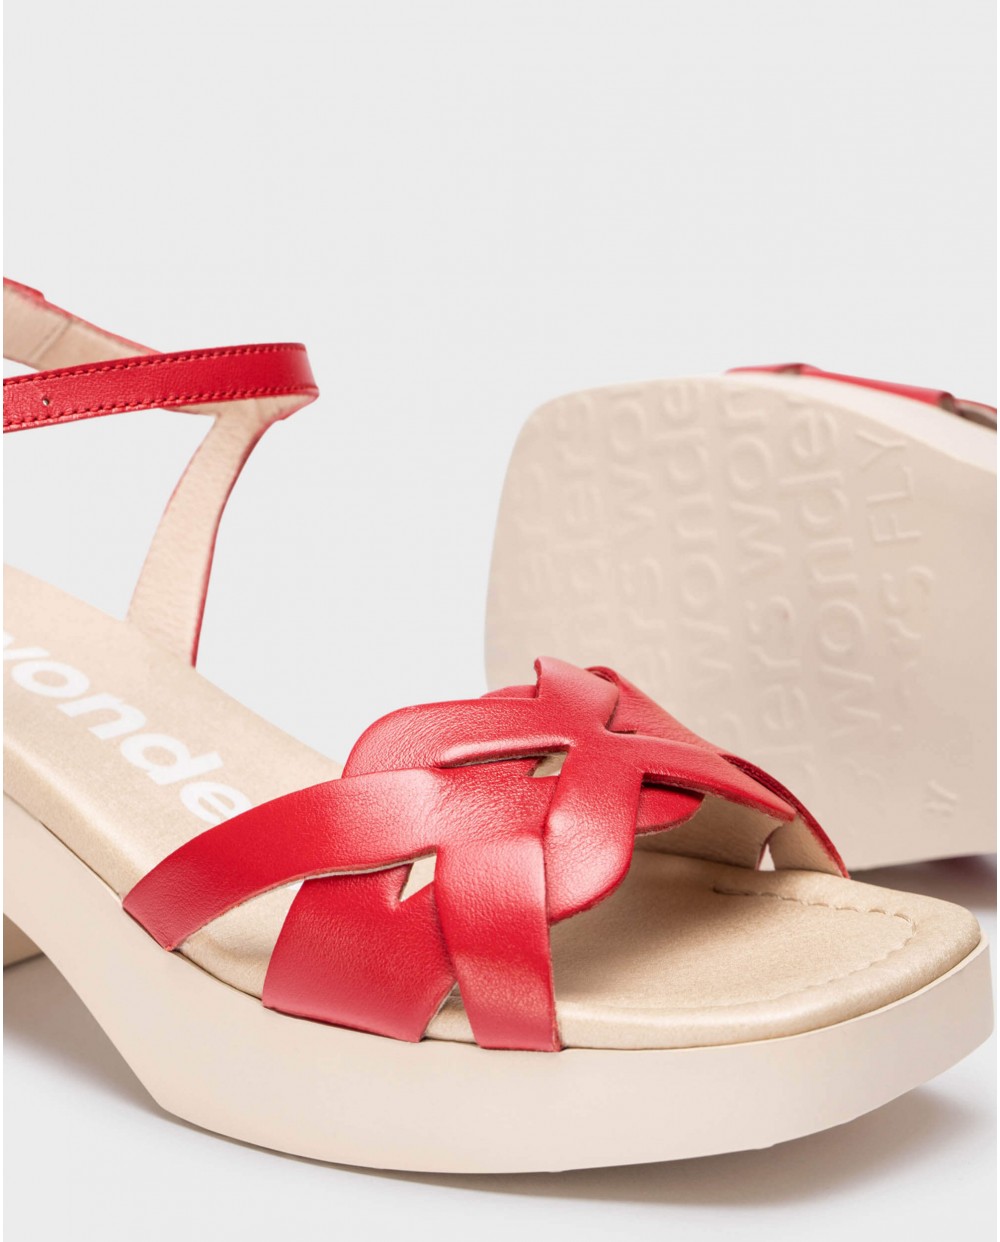 Wonders-Sandals-Red Catalina sandals